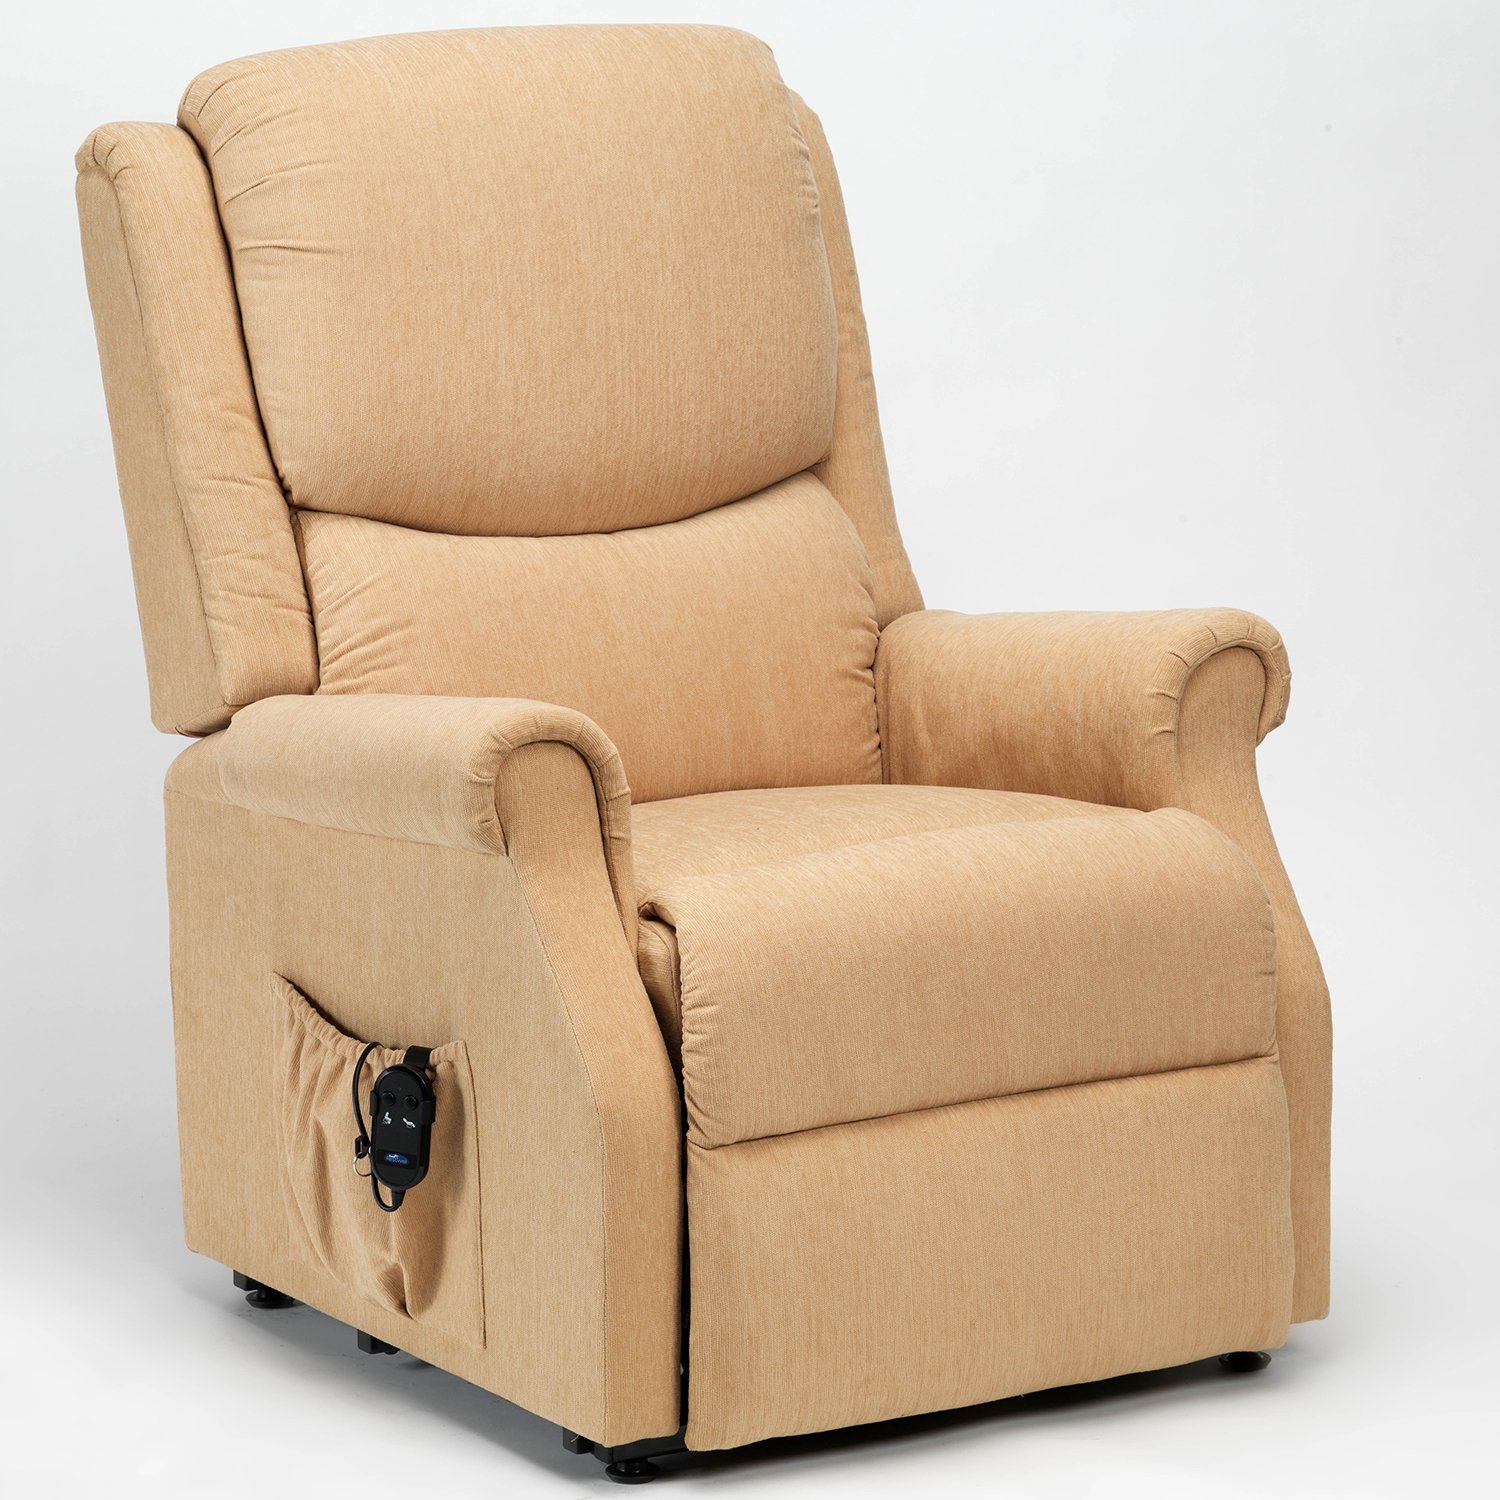 Indiana Single Motor Standard & Petite Riser Recliner Chair – Biscuit